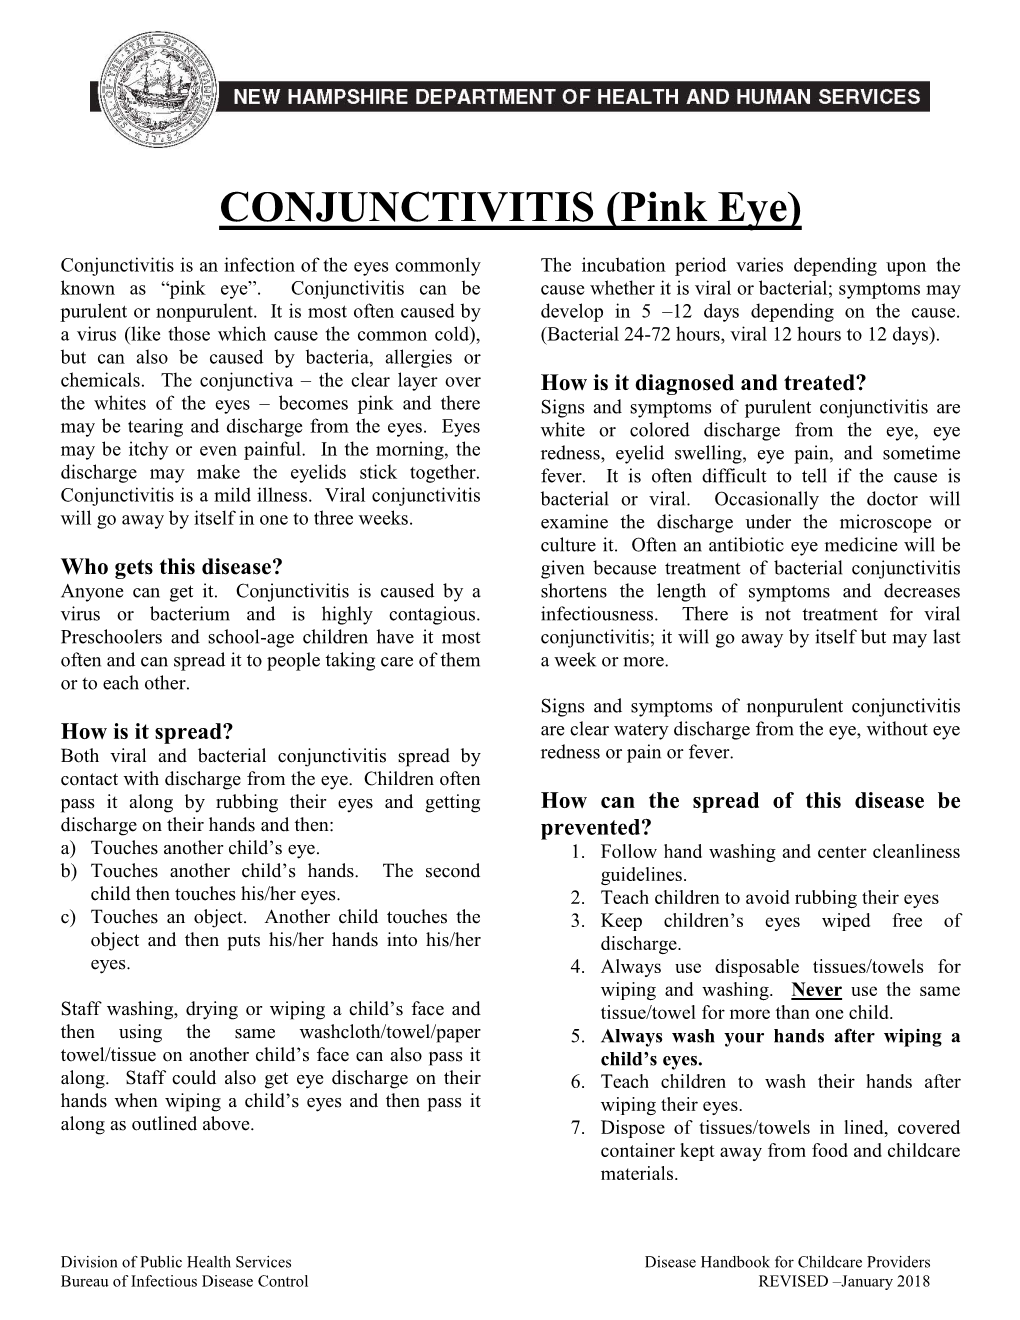 CONJUNCTIVITIS (Pink Eye) Cont